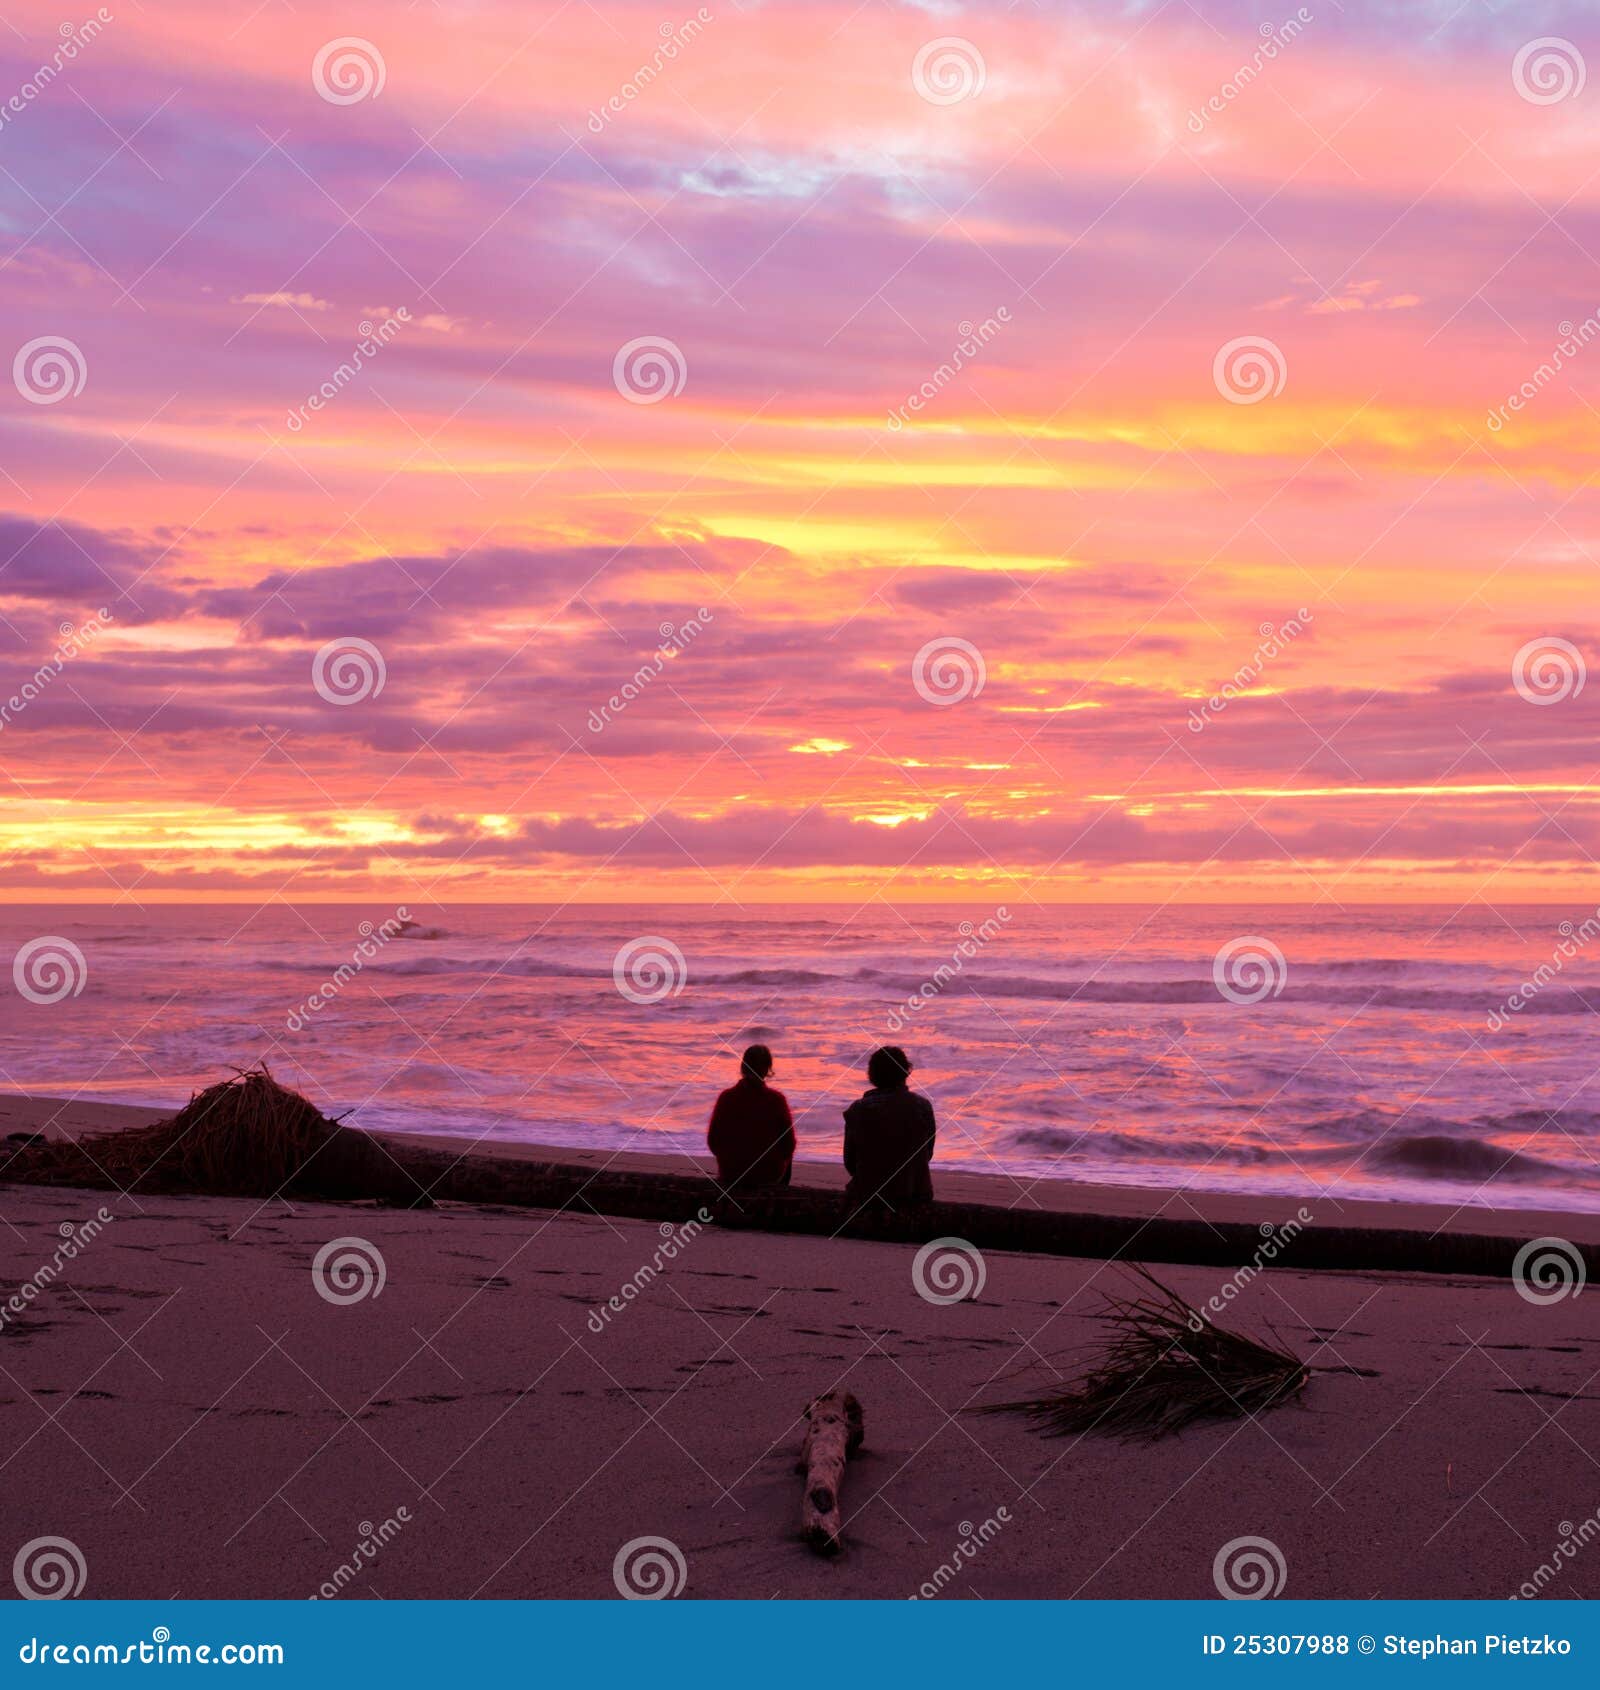 romantic couple enjoy spectacular beach sunset